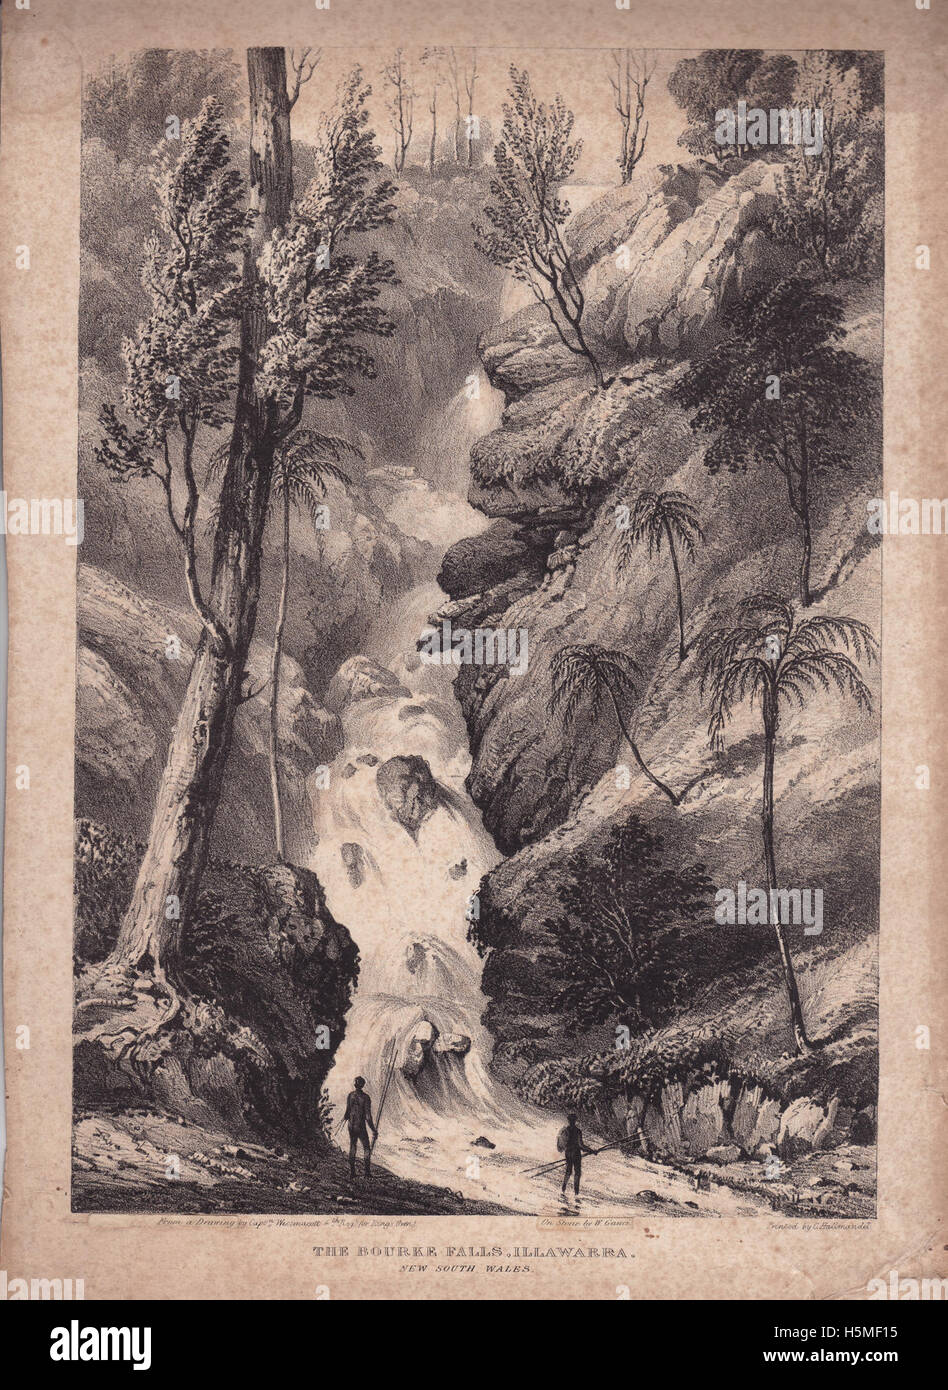 Bourke Falls, Illawarra undated - from drawing by Capt Westamacott Stock Photo